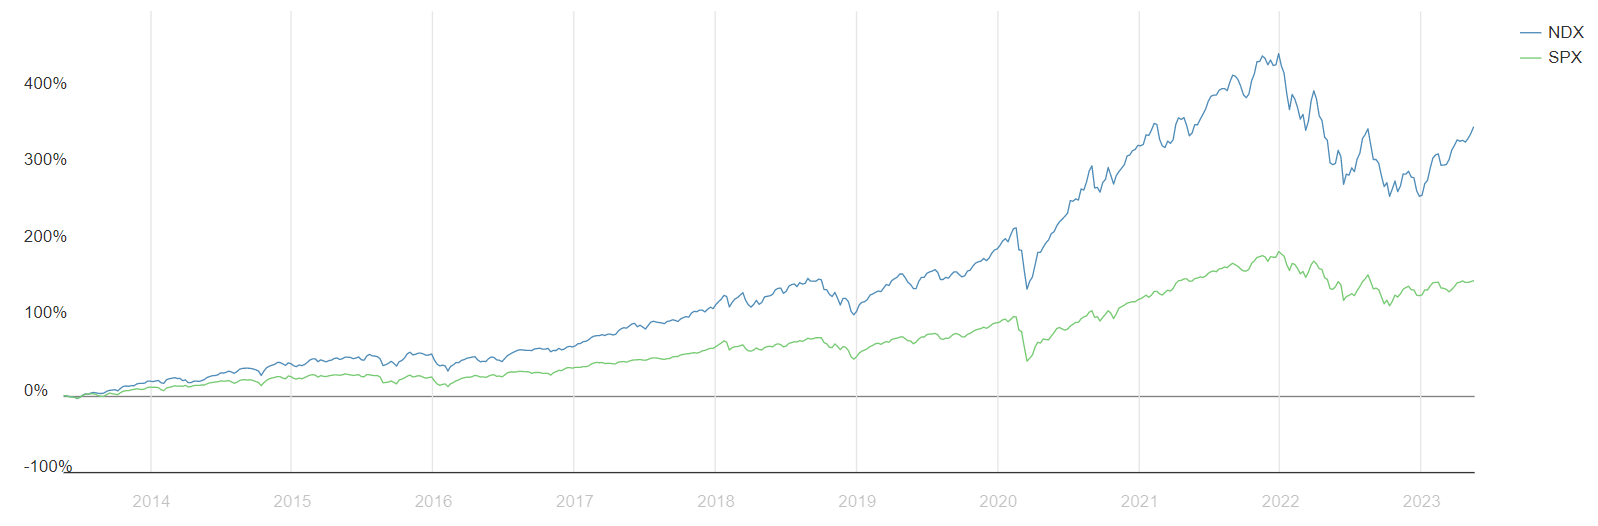 Wykres Nasdaq i S&P 500